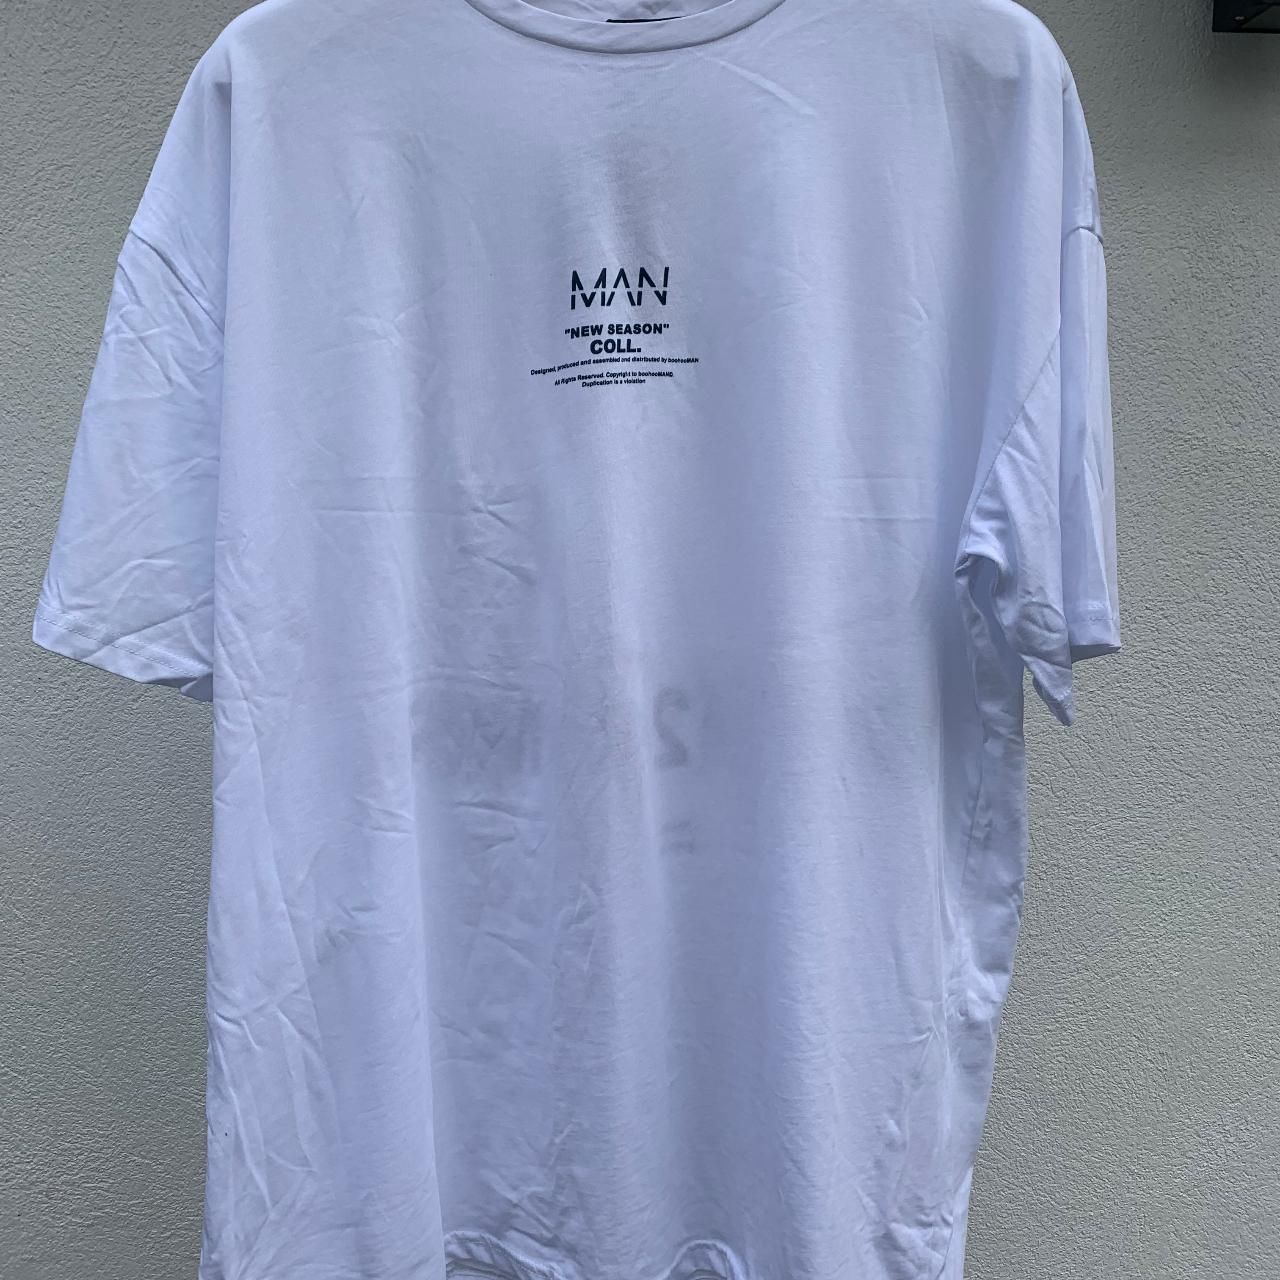 Boohoo Men's White T-shirt | Depop